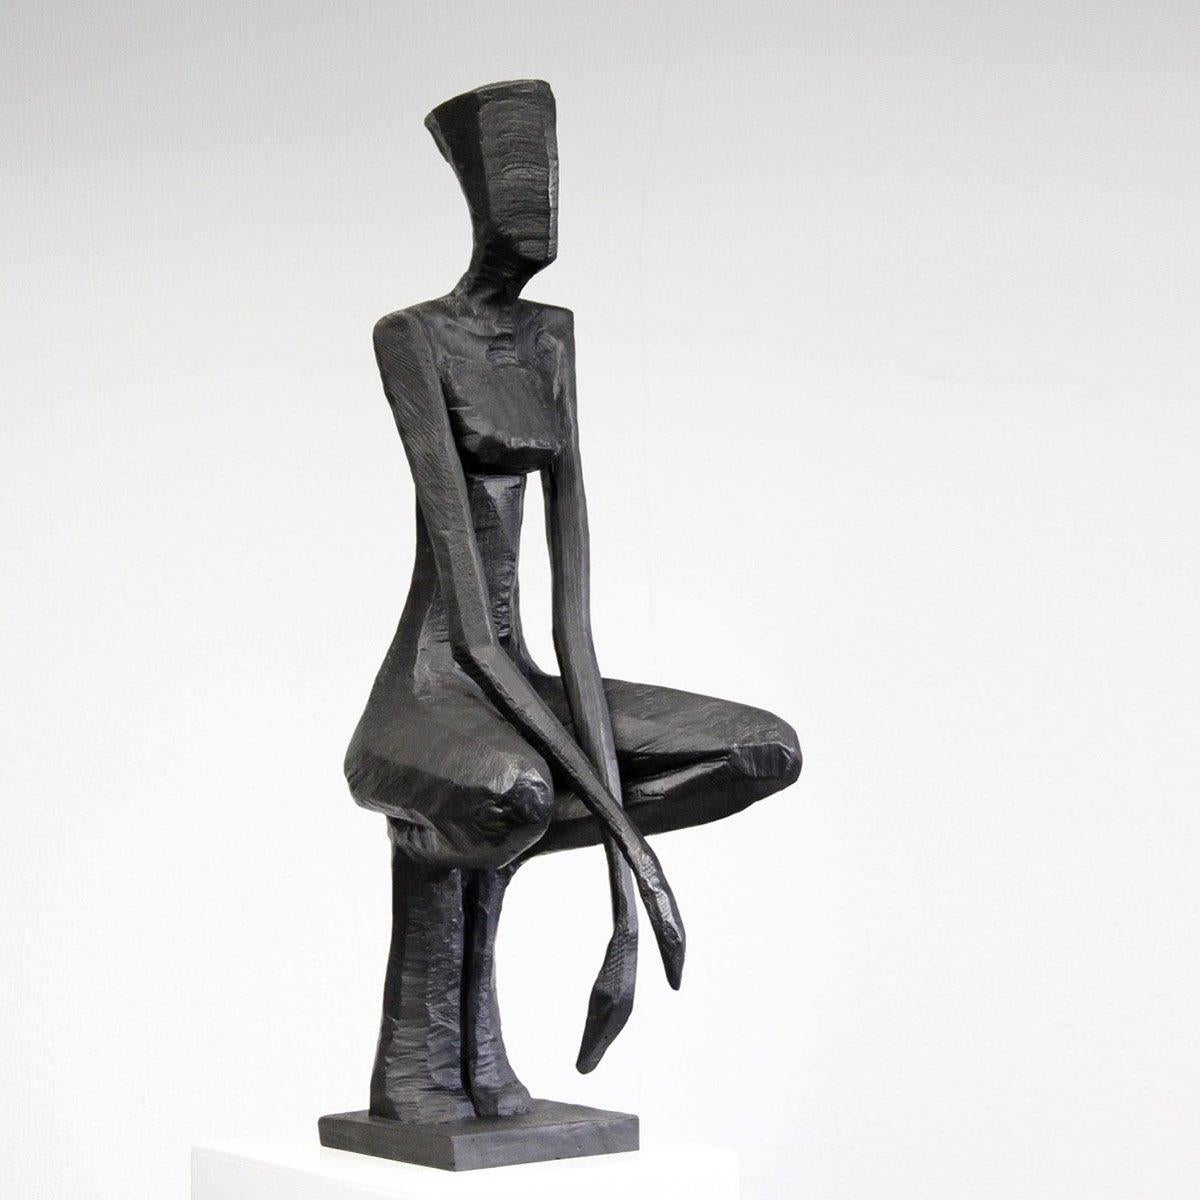 sculpture showing movement